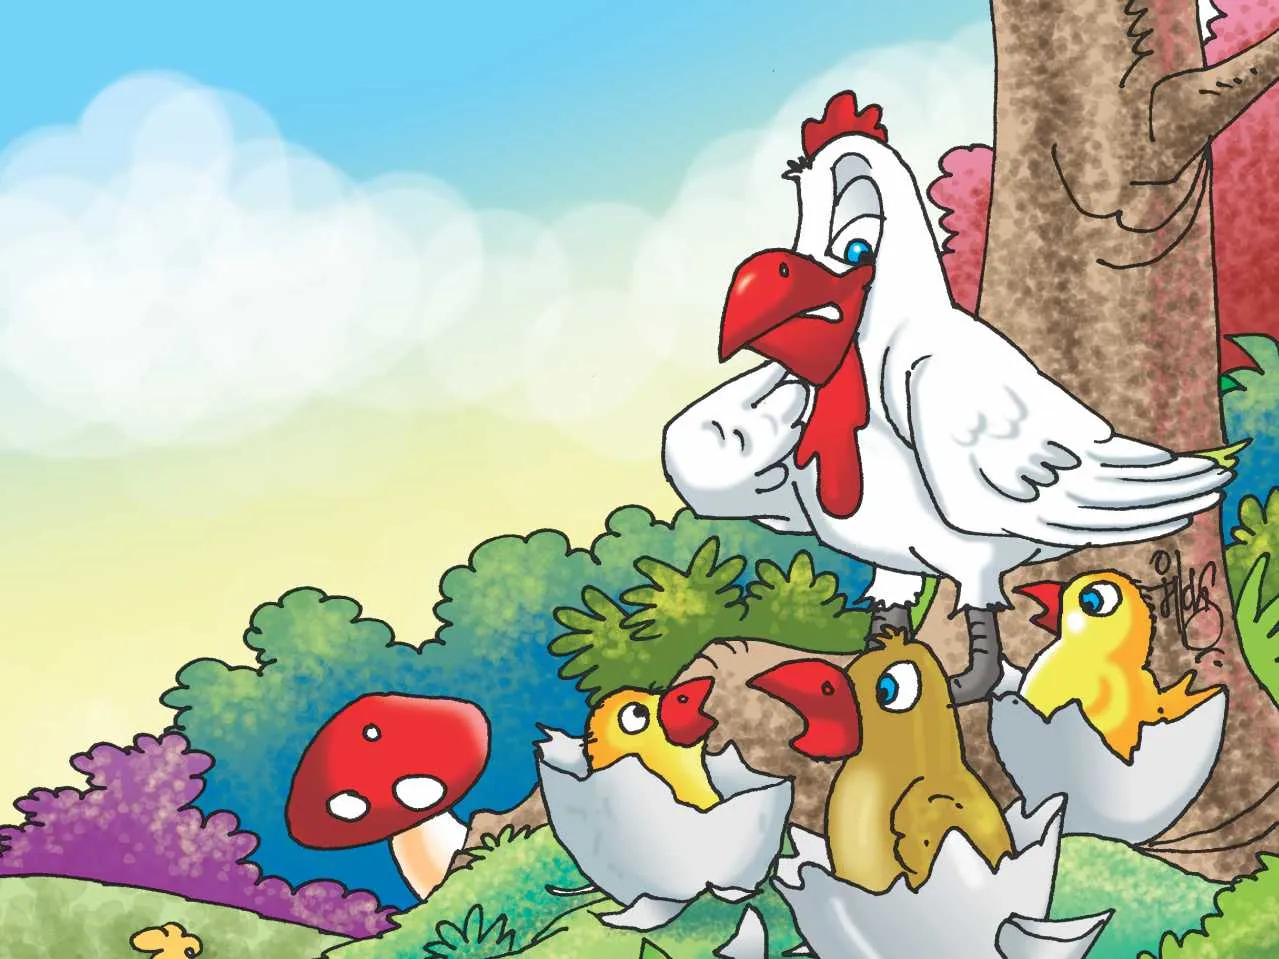 Hen and chicks cartoon image